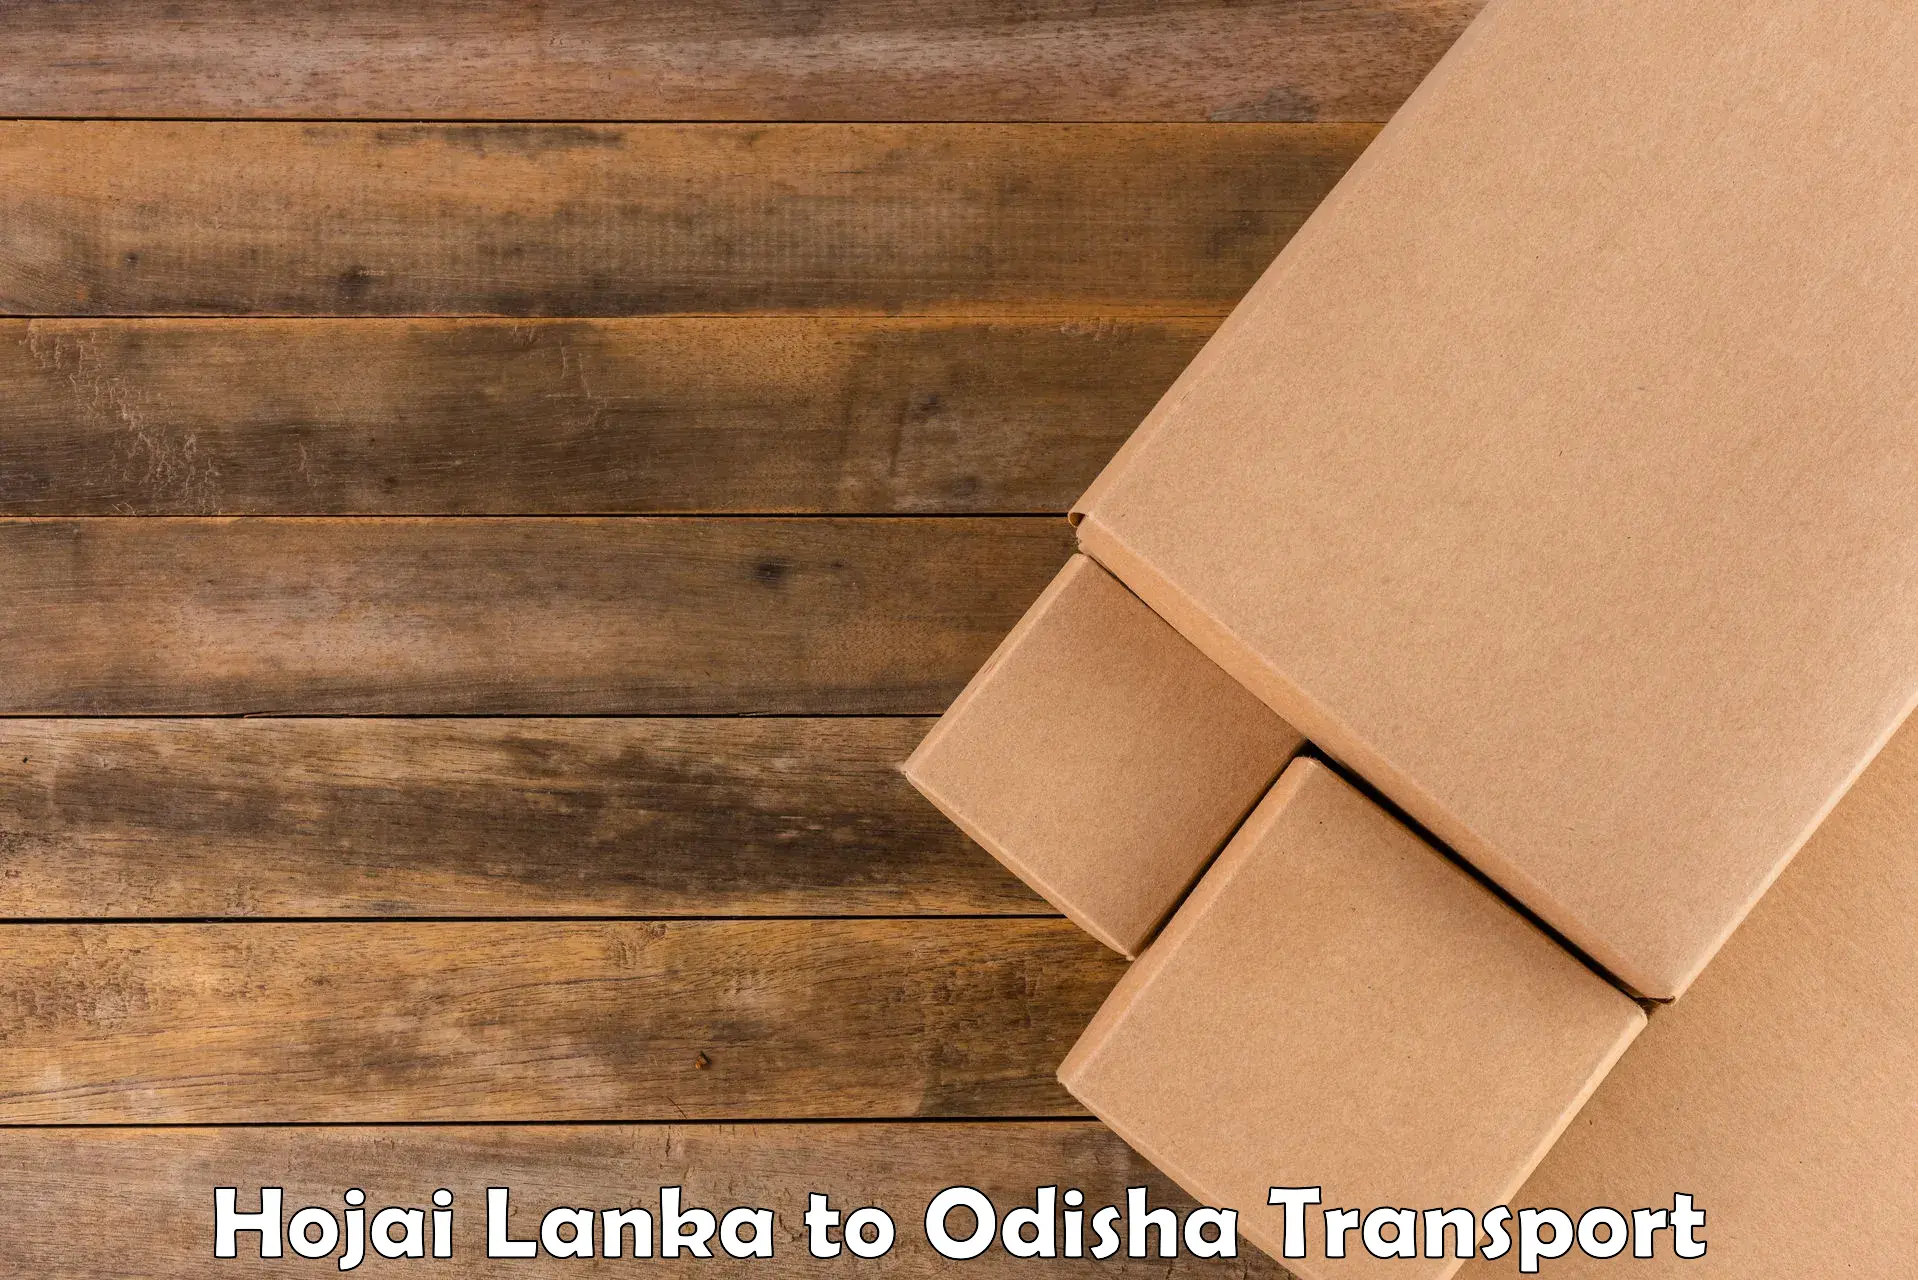 Cargo train transport services Hojai Lanka to Galleri